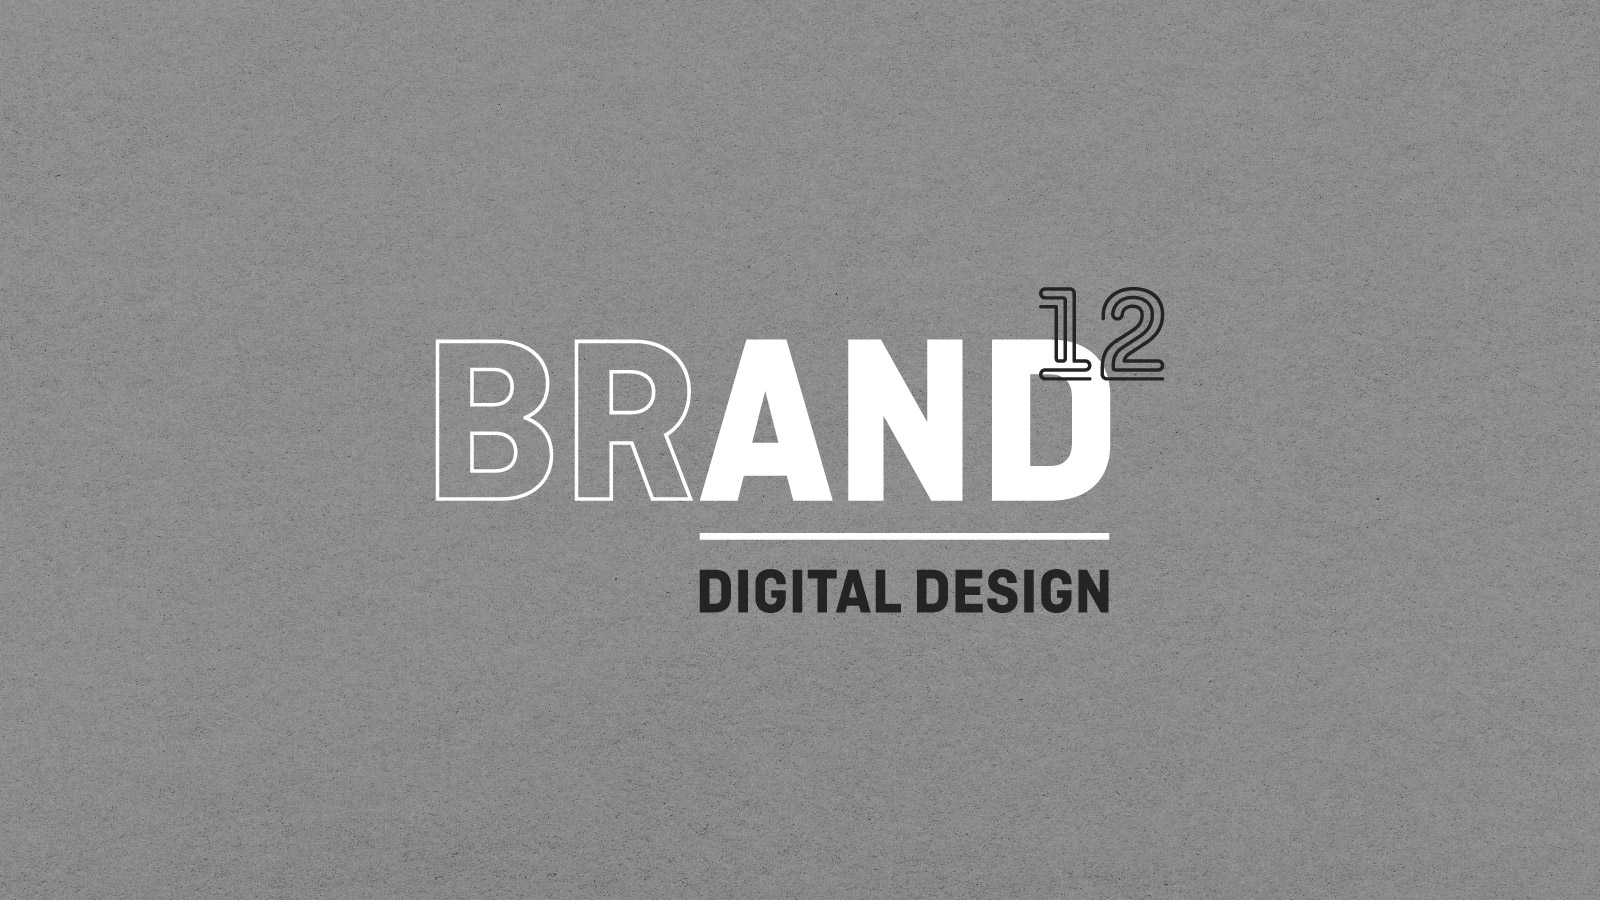 Brand identity extension through brand language and design.